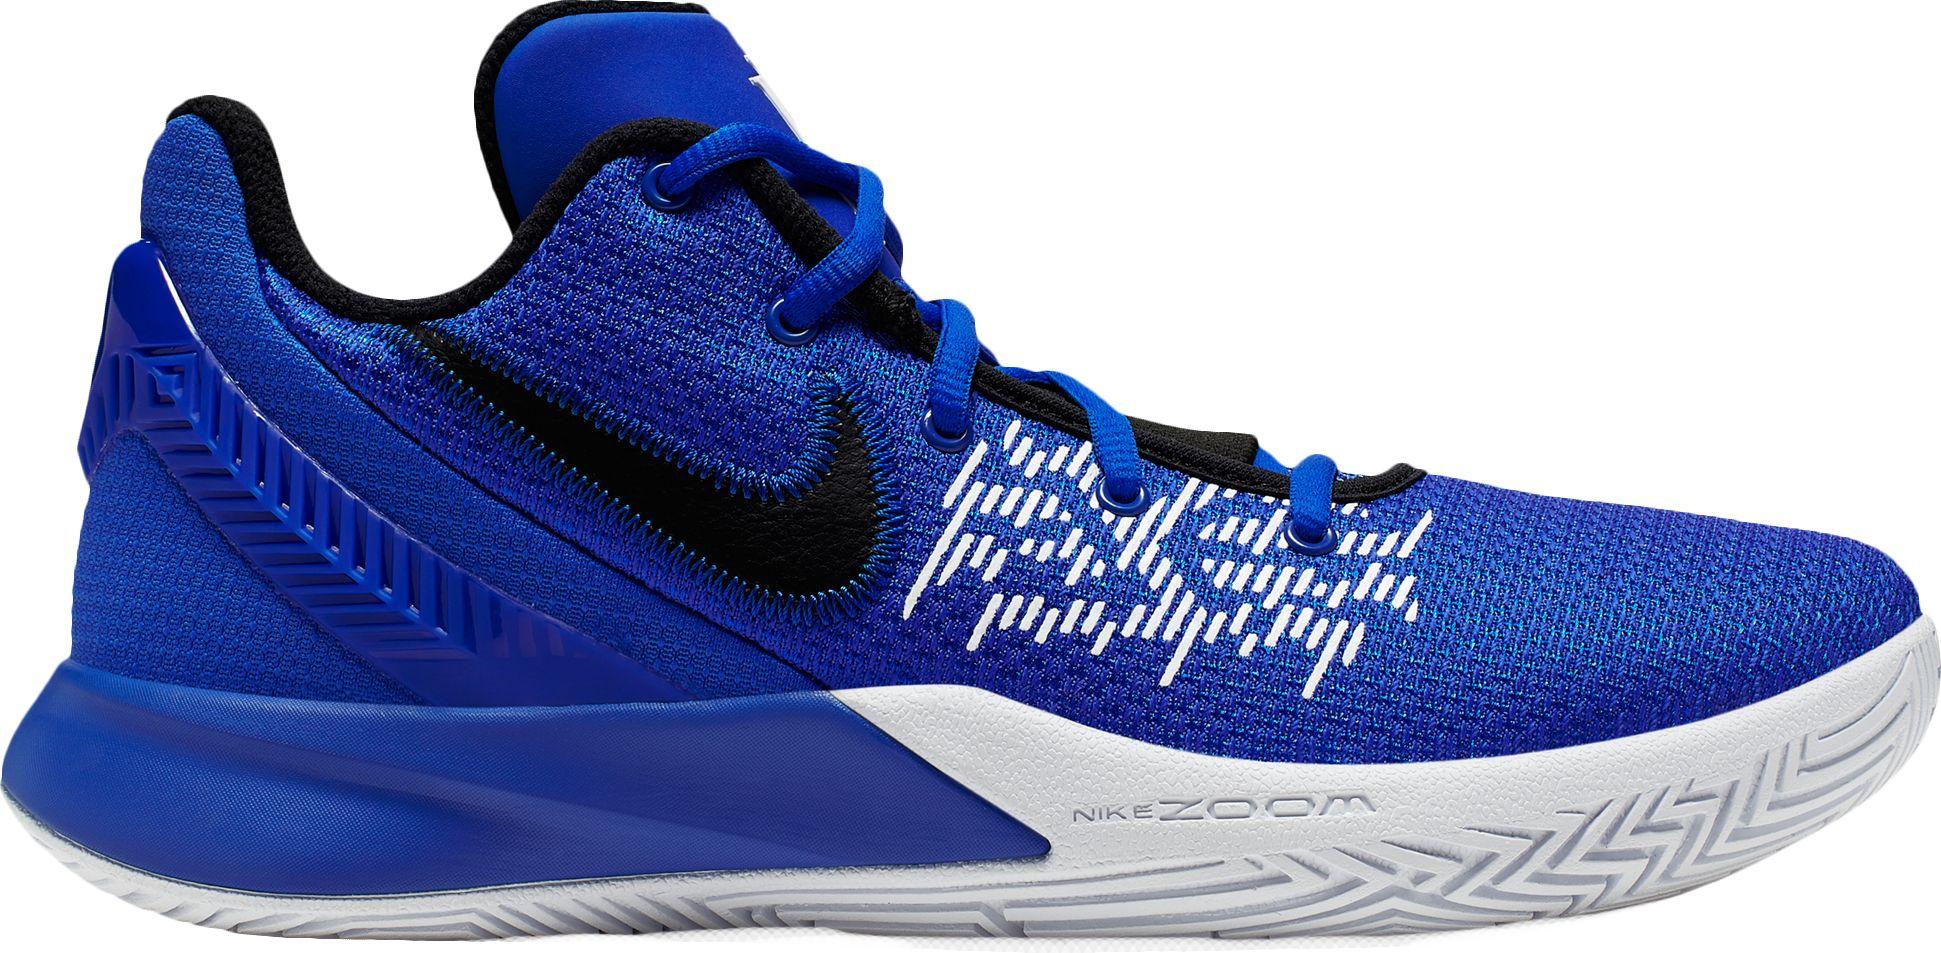 Nike Kyrie Flytrap Ii Basketball Shoes in Blue/Black (Blue) for Men | Lyst